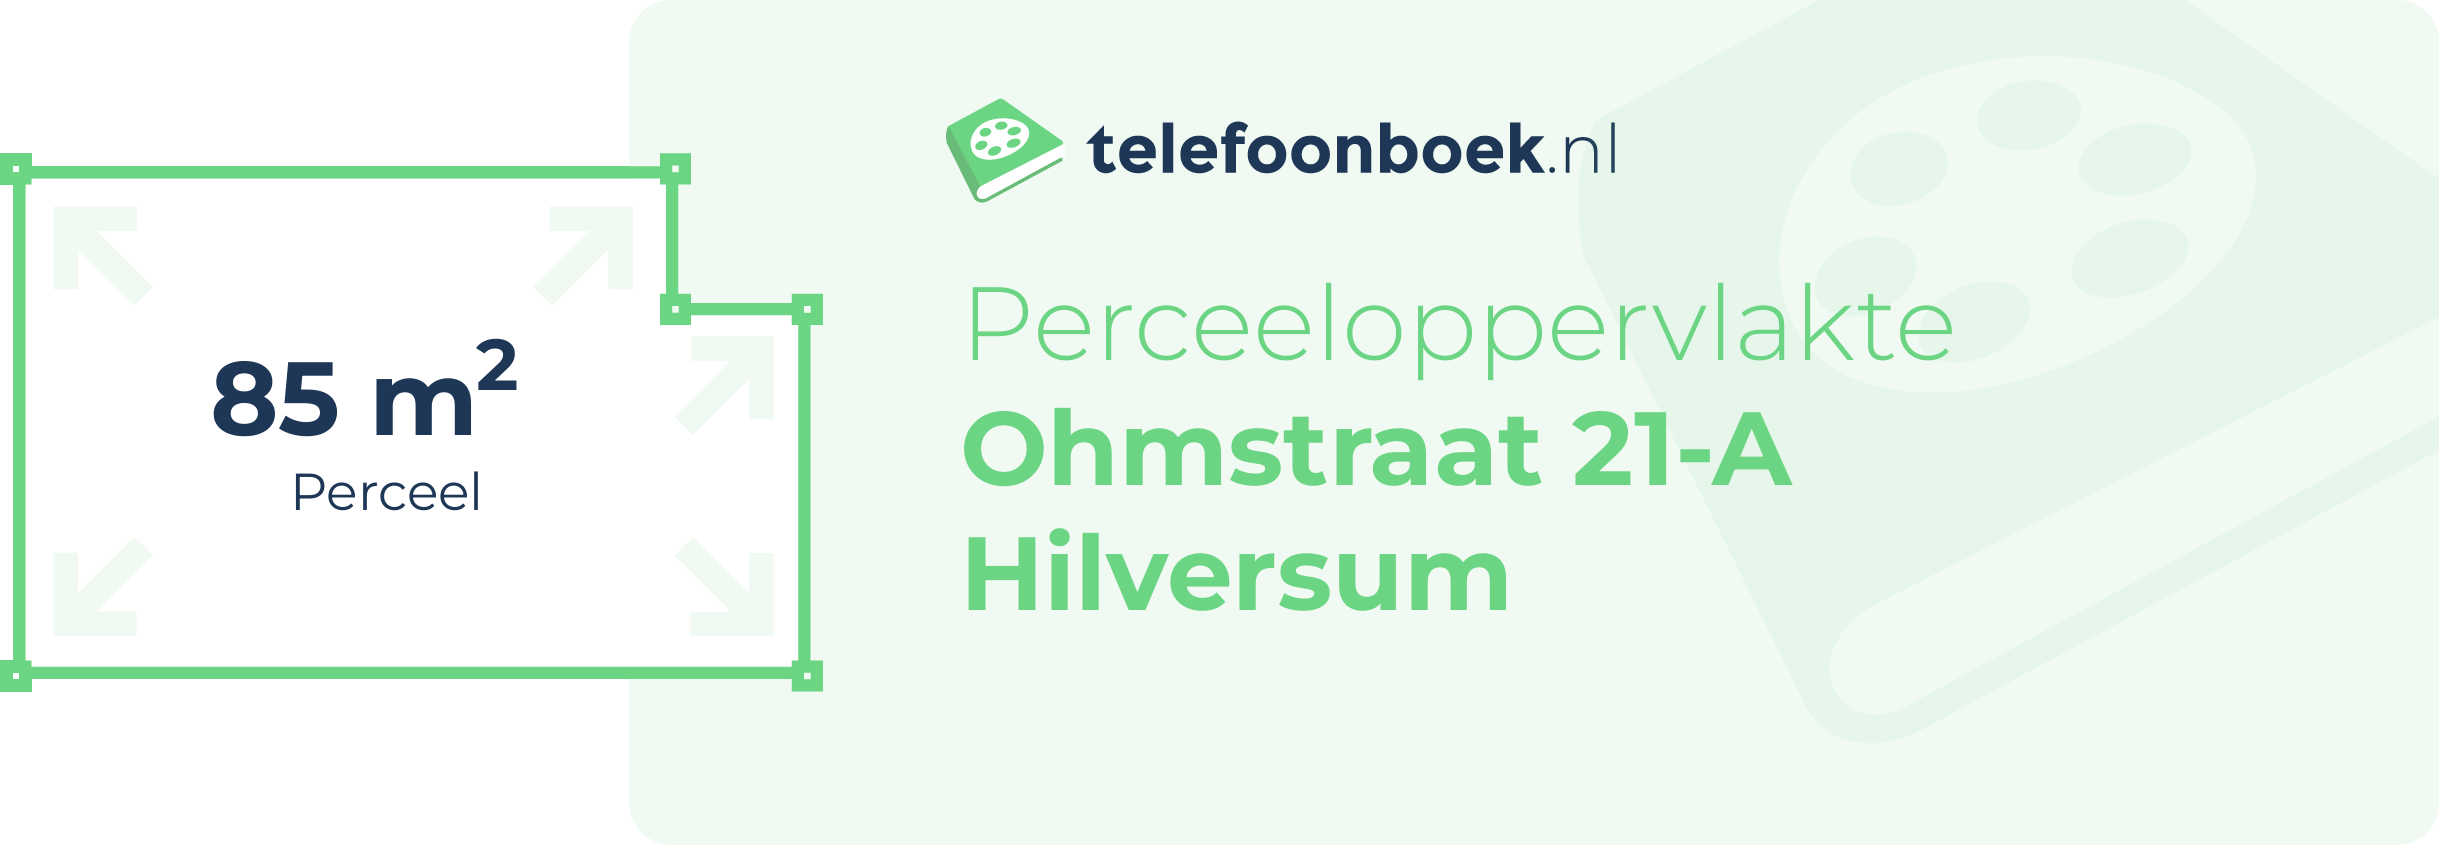 Perceeloppervlakte Ohmstraat 21-A Hilversum